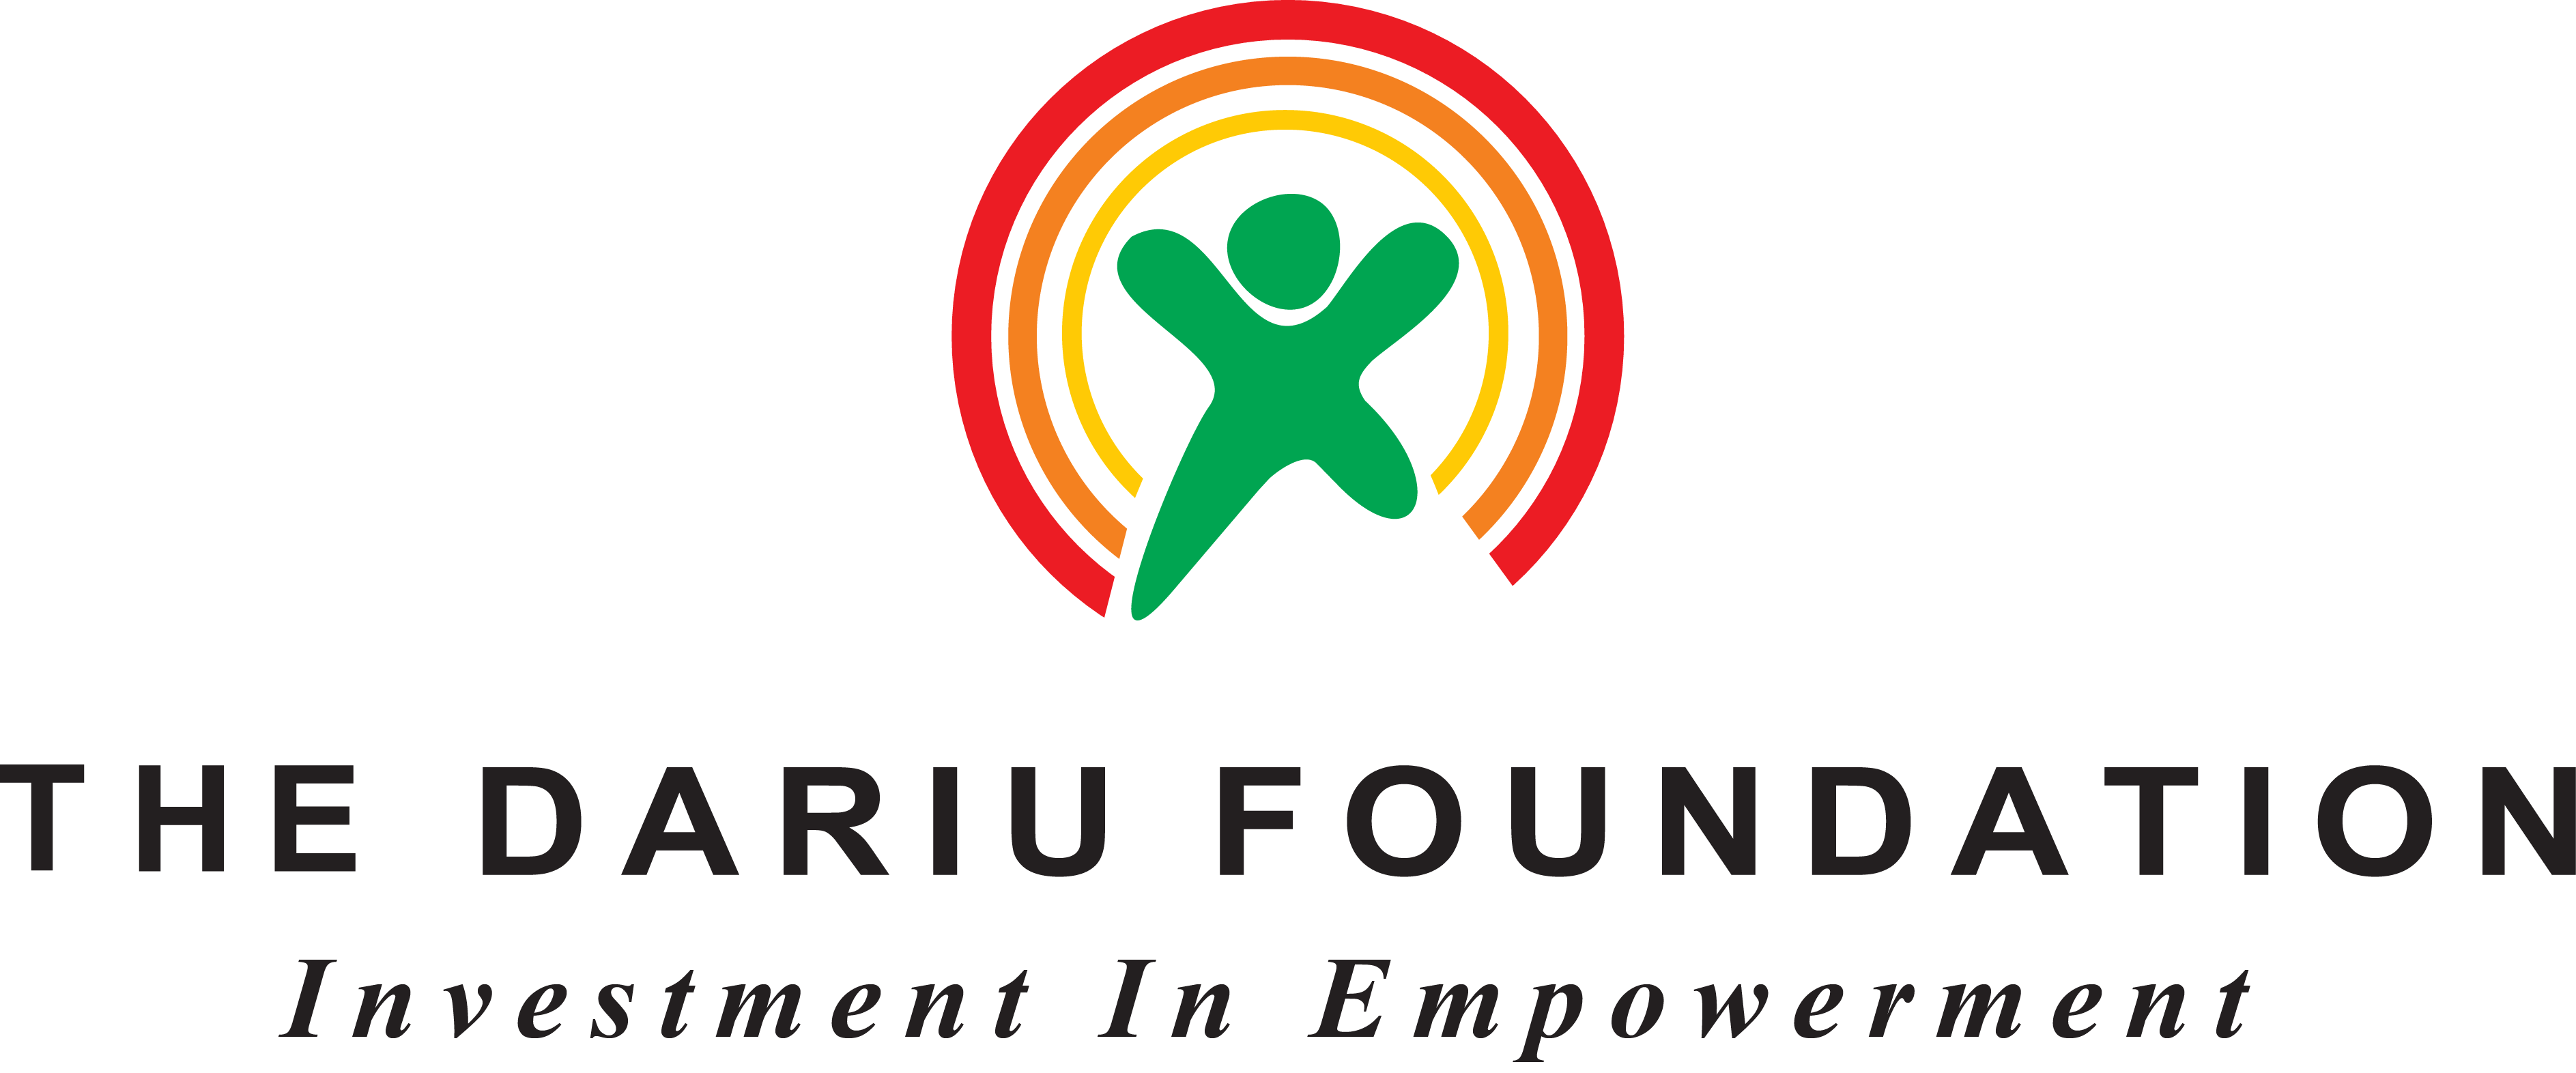 The Dariu Foundation